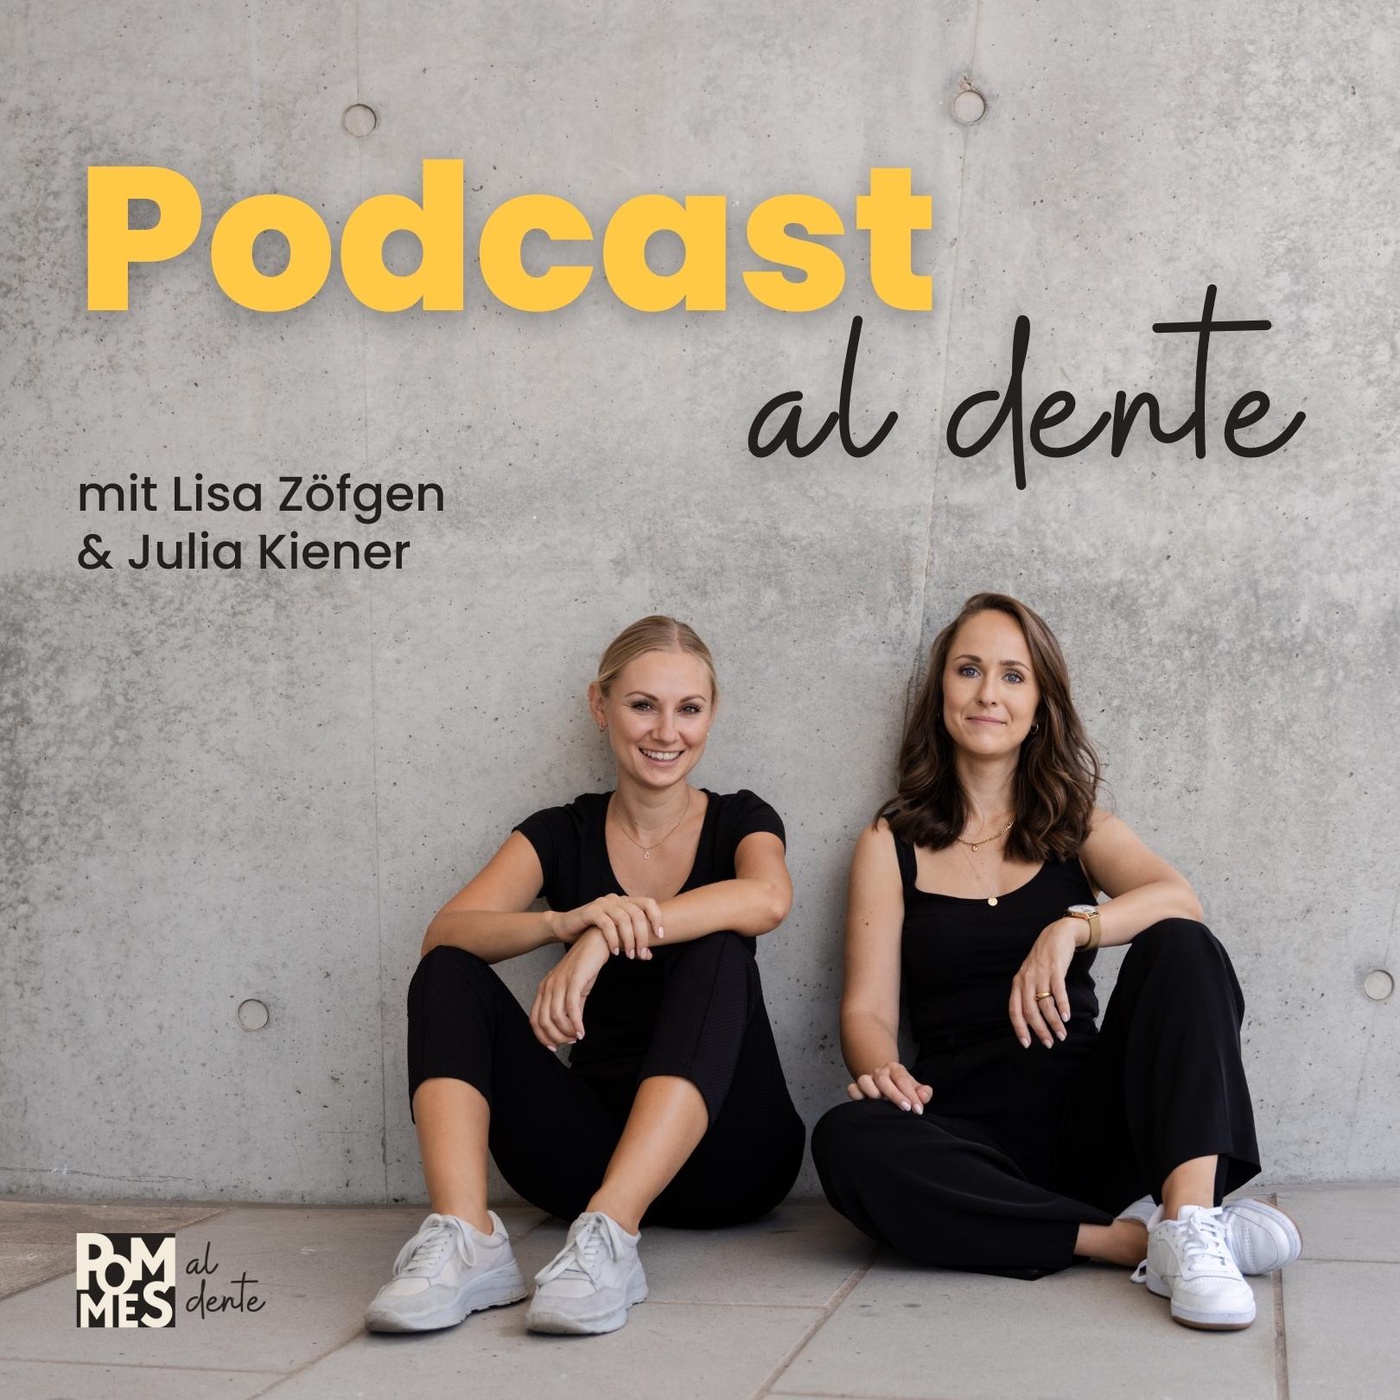 Podcast al dente – Corporate Influencing und Personal Branding mit Lisa Zöfgen & Julia Kiener